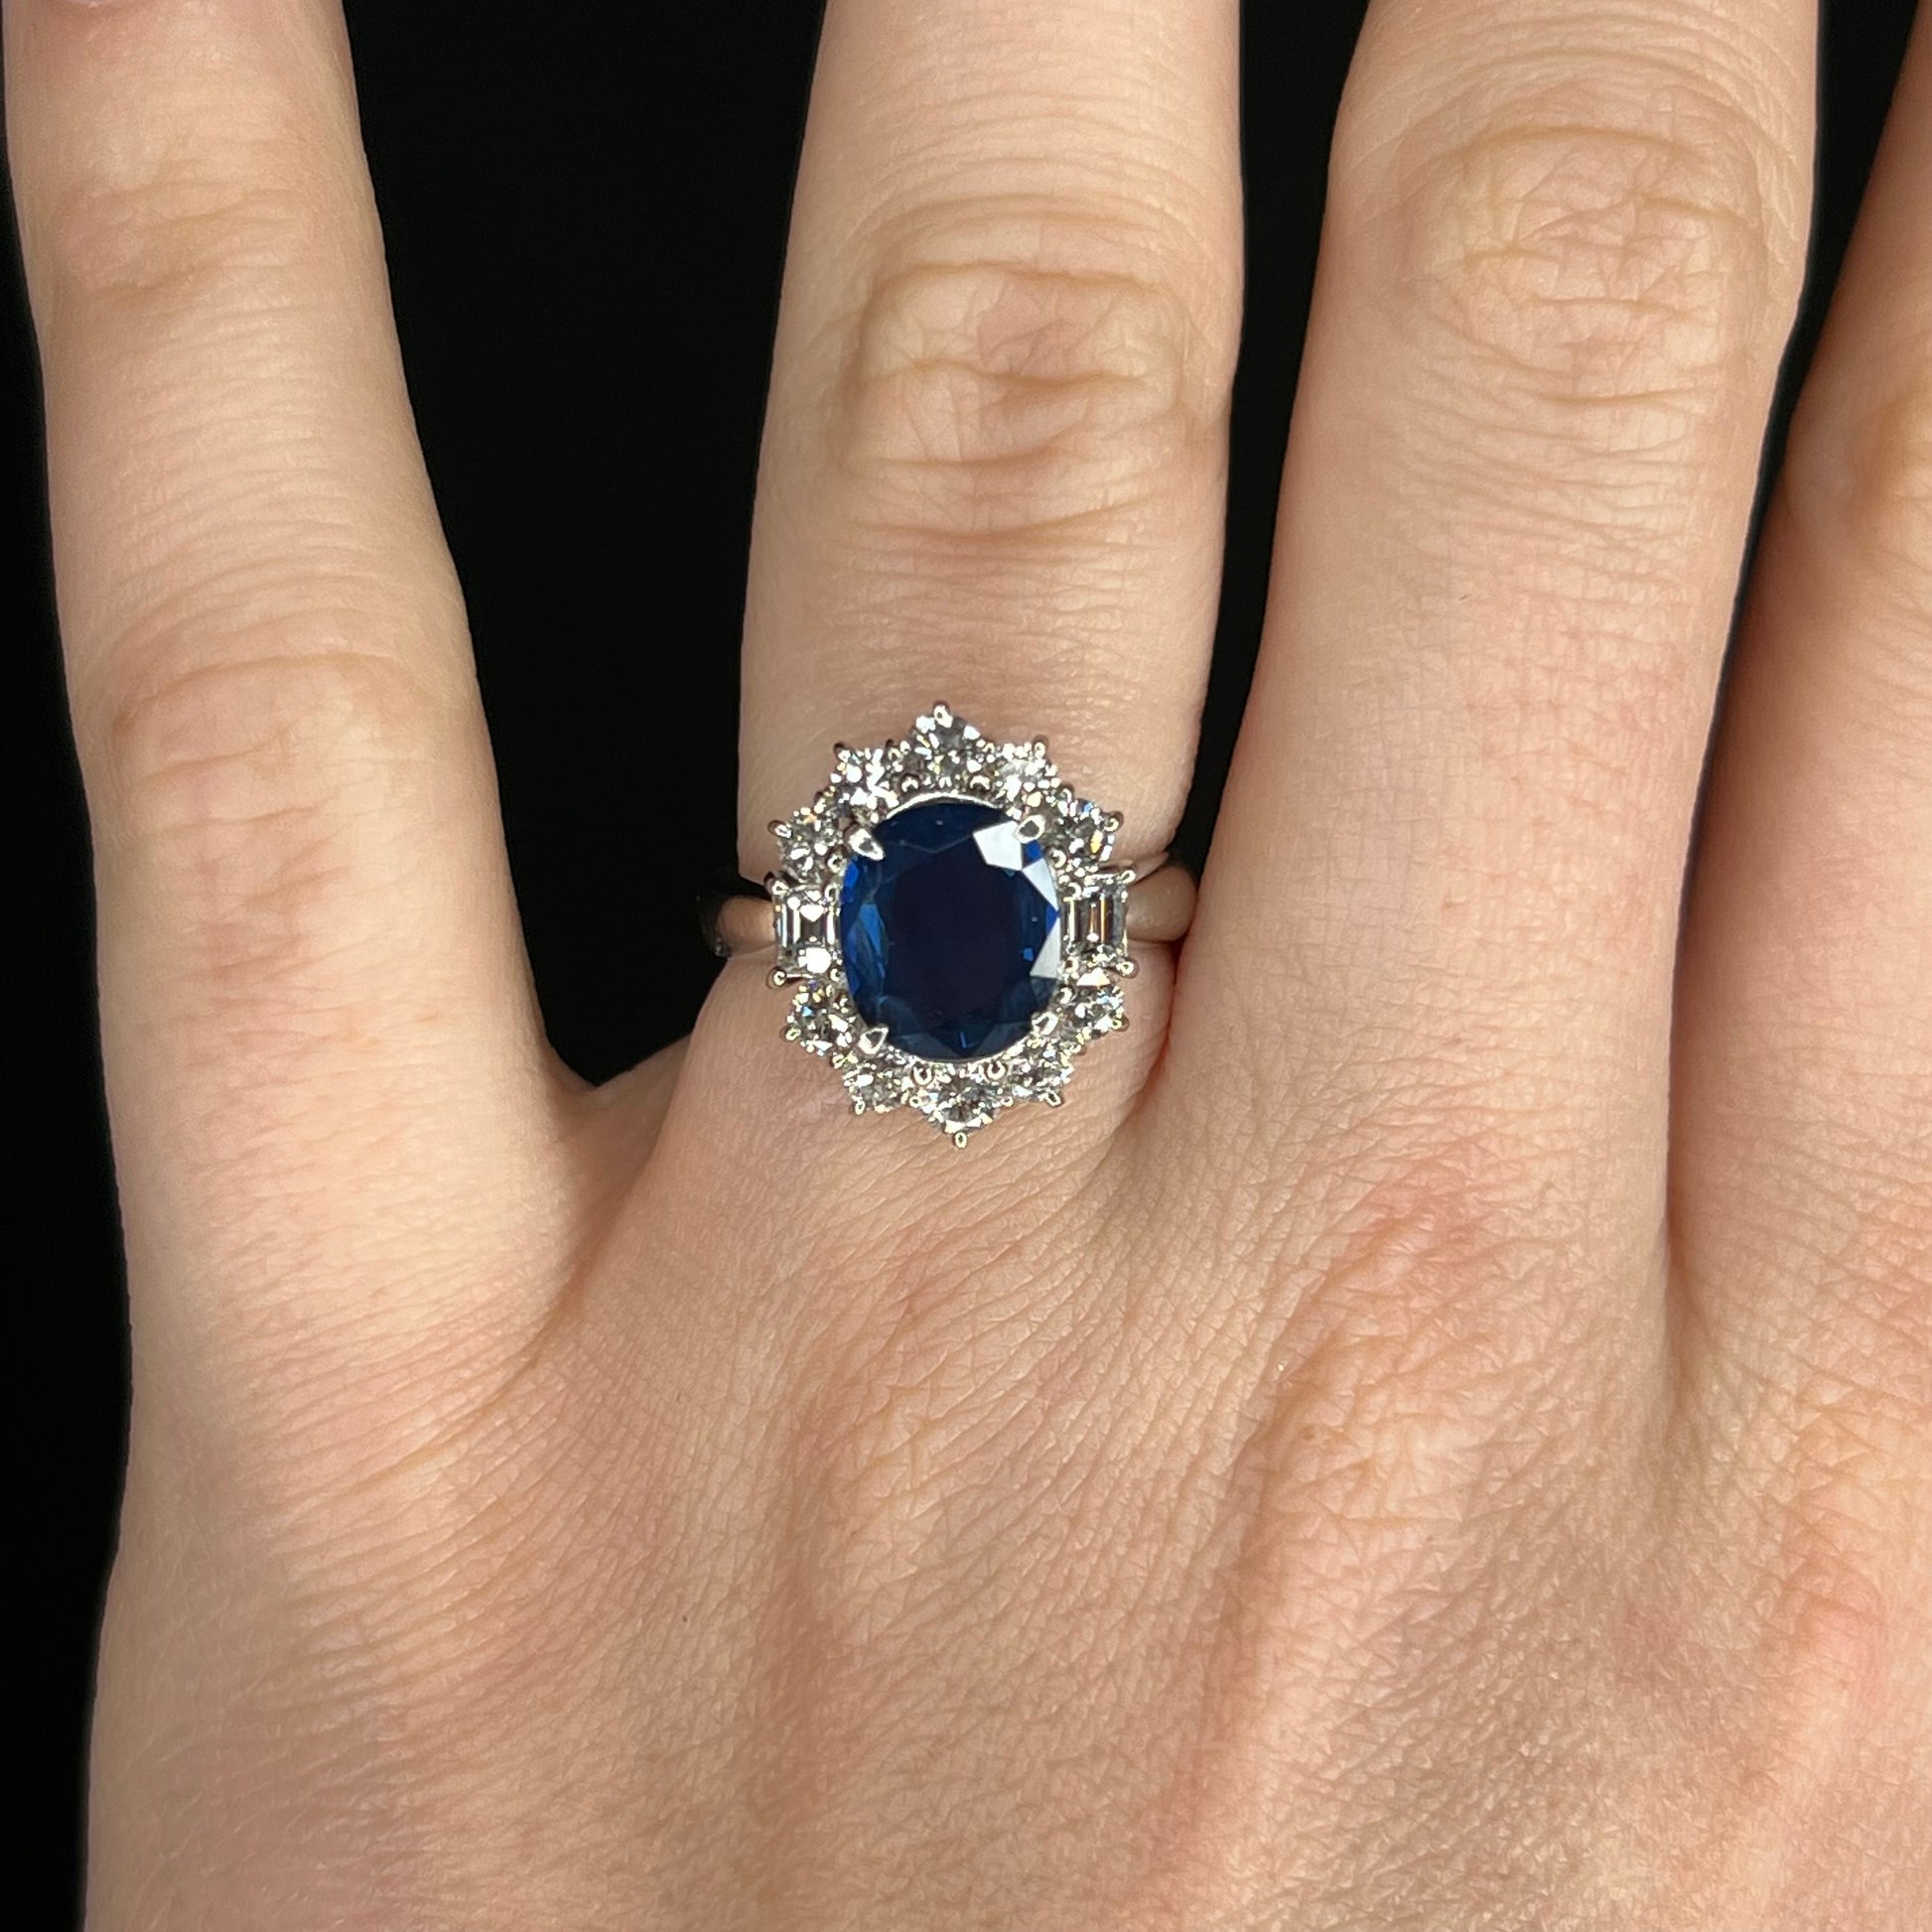 3 Carat Oval Sapphire & Diamond Ring in Platinum